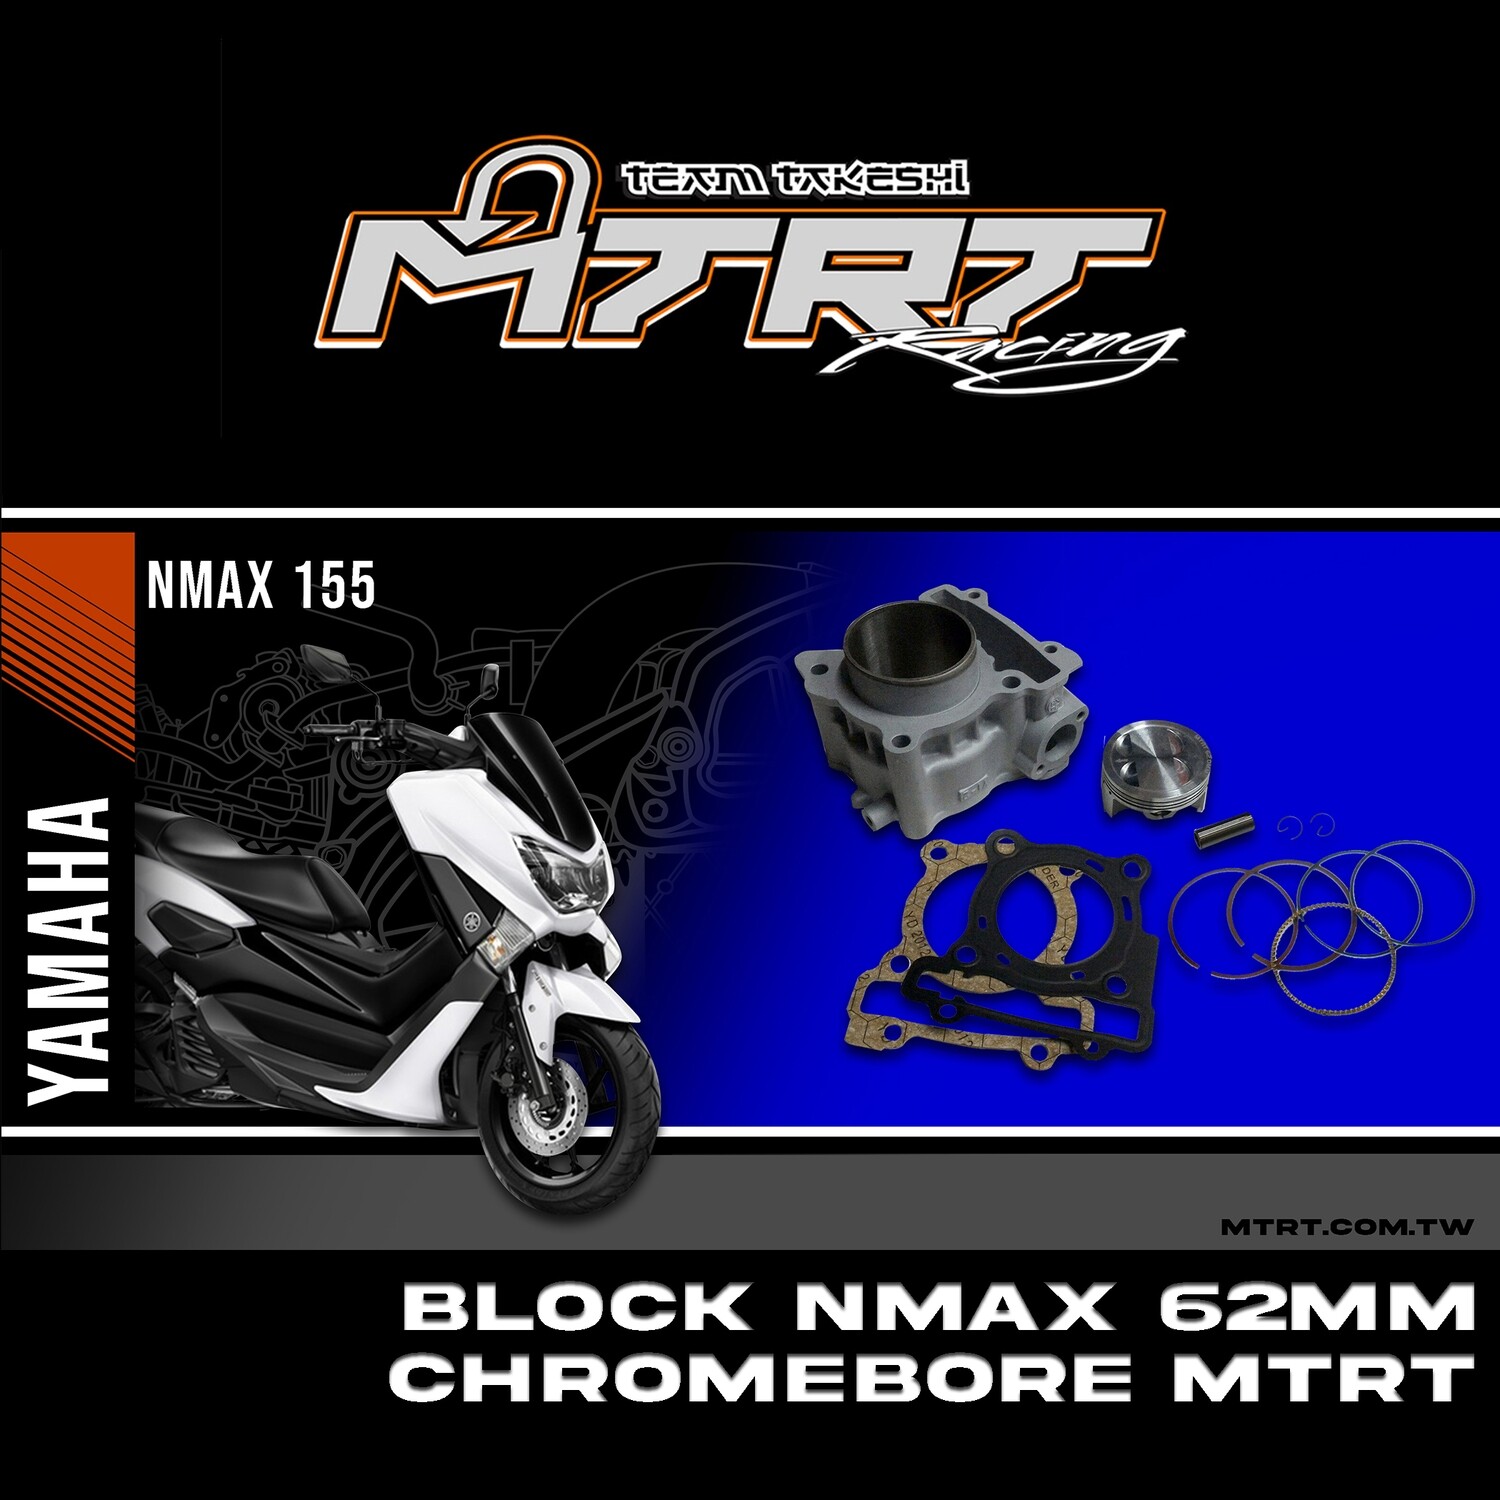 BLOCK NMAX/AEROX 62MM Chromebore MTRT